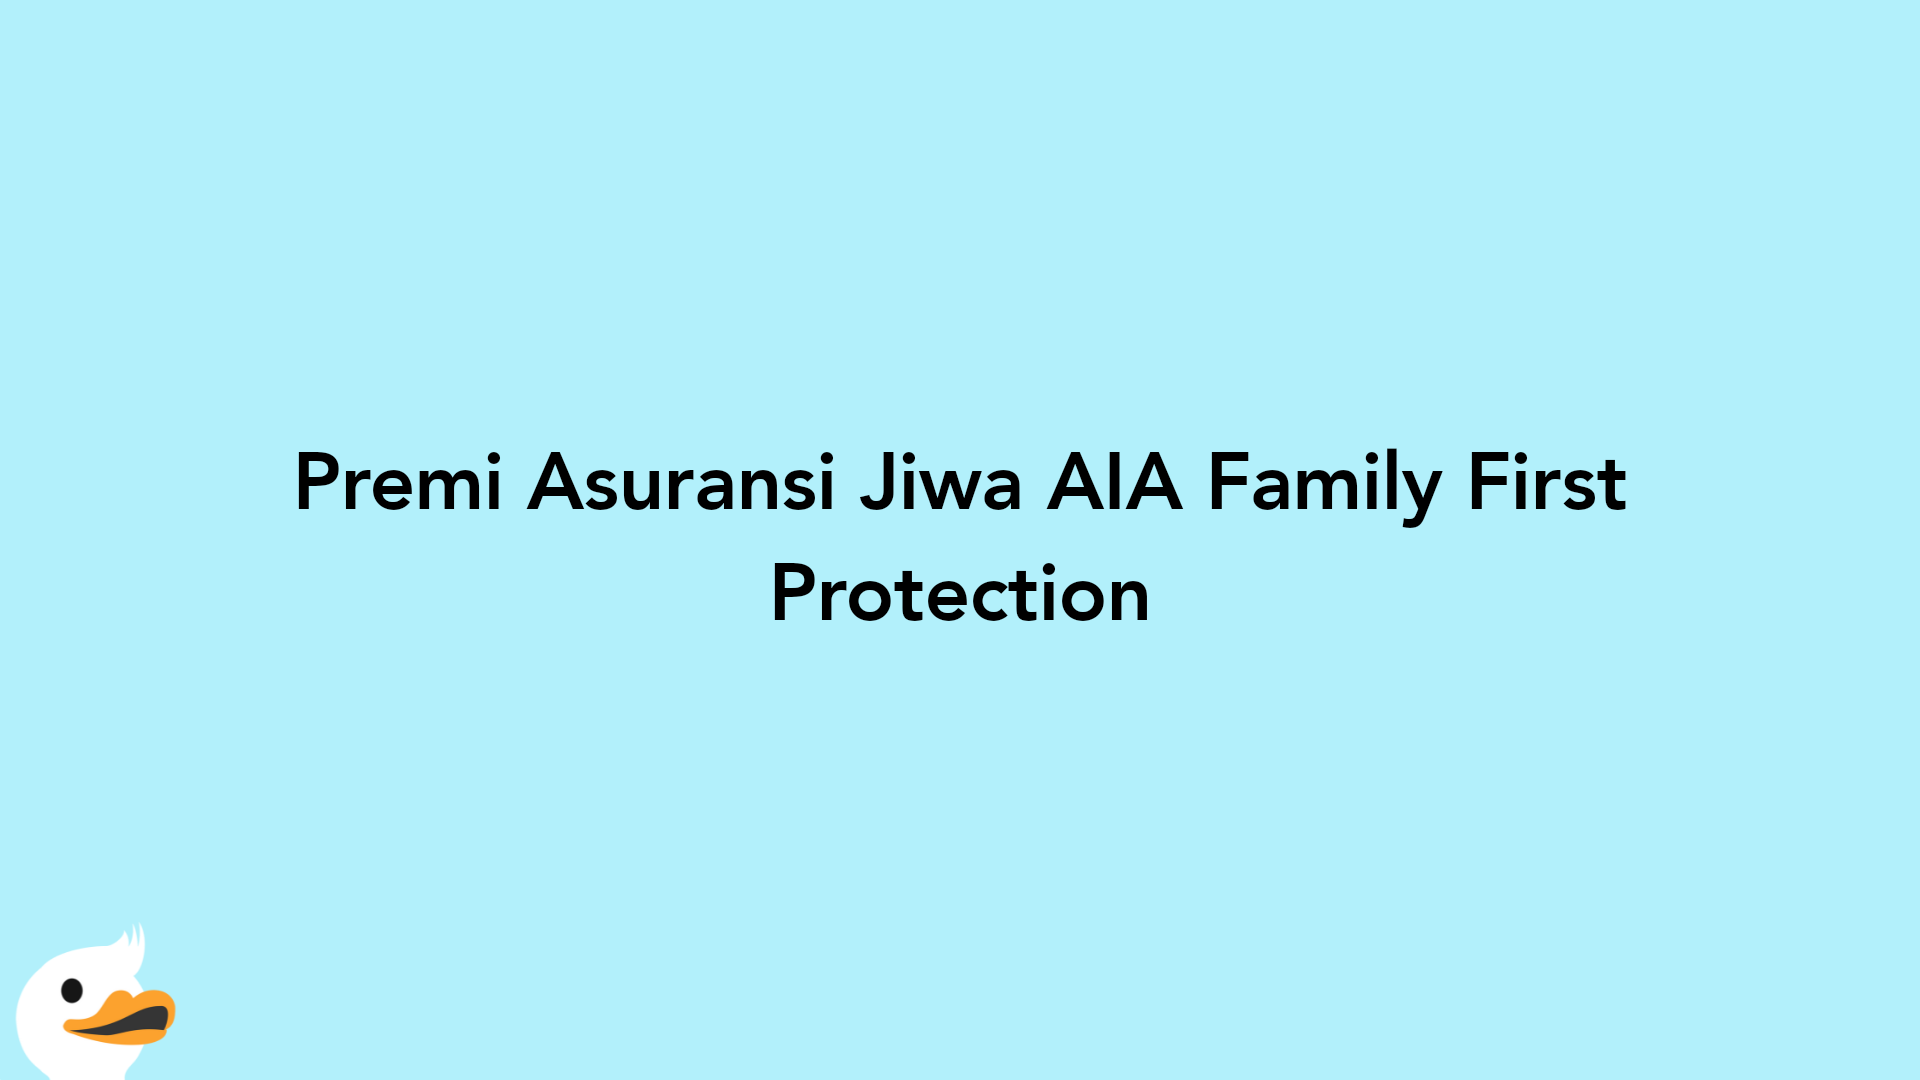 Premi Asuransi Jiwa AIA Family First Protection